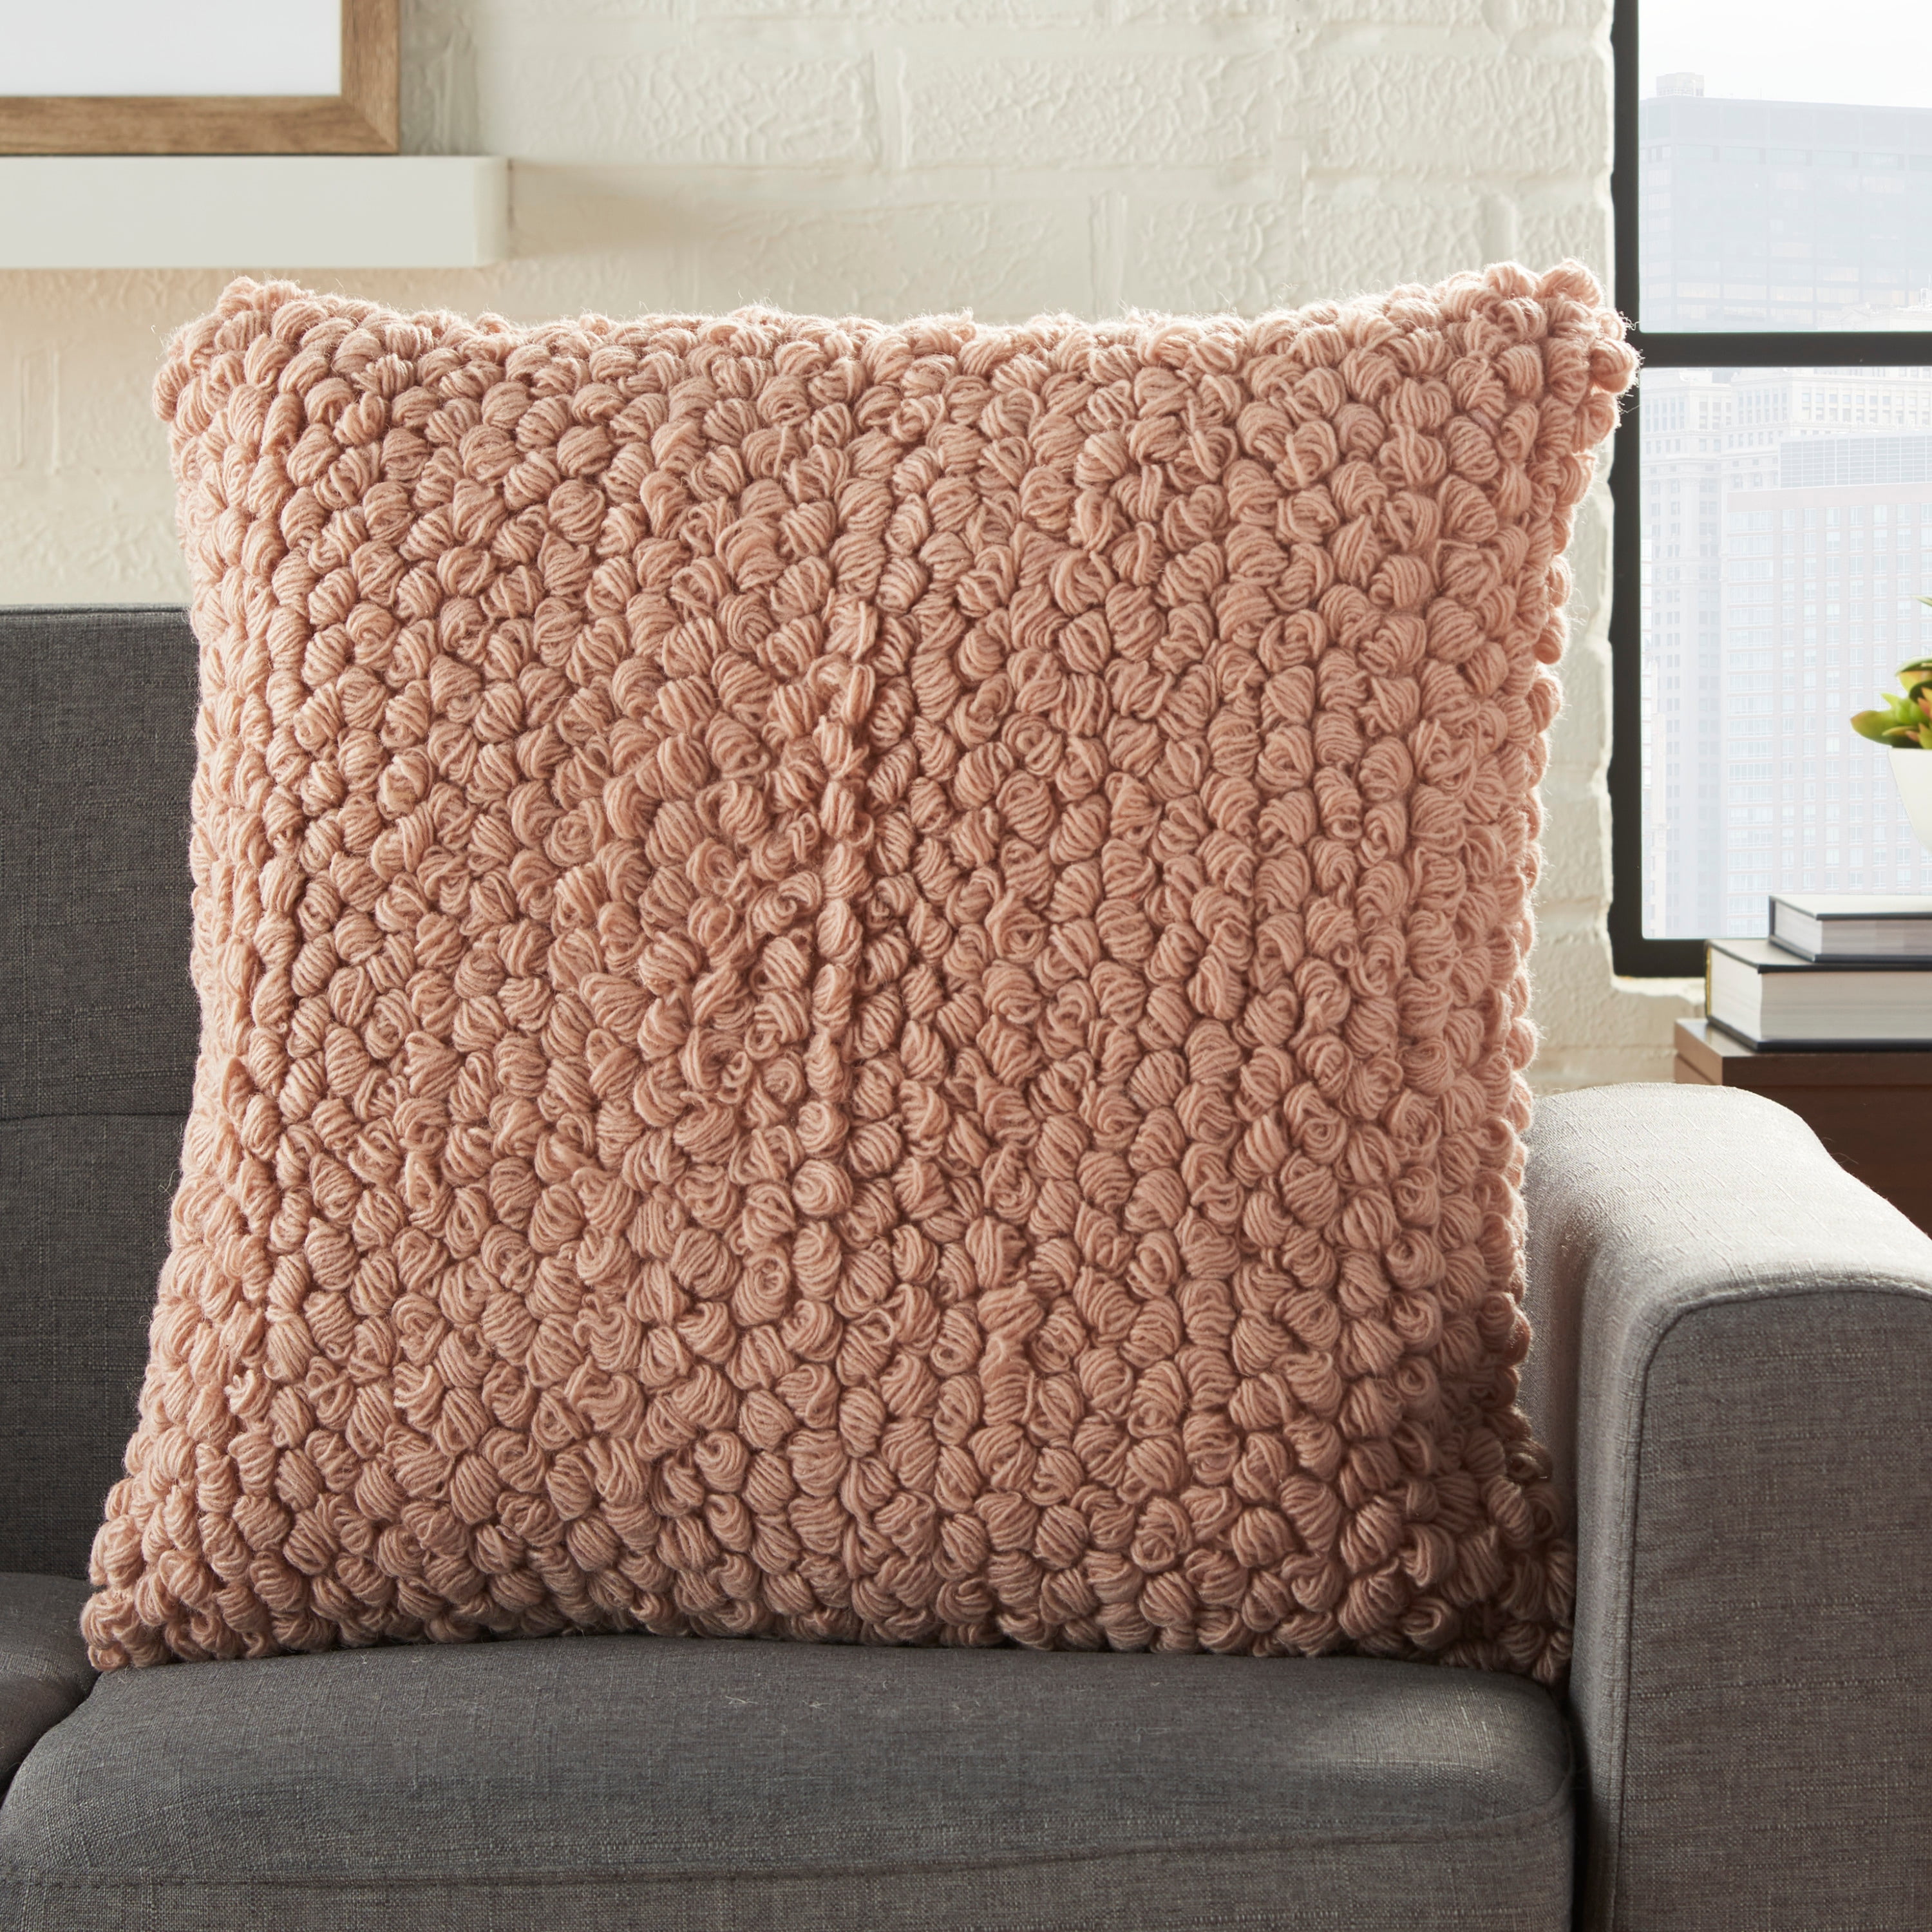 Nourison Life Styles Blush Decorative Throw Pillow , 20